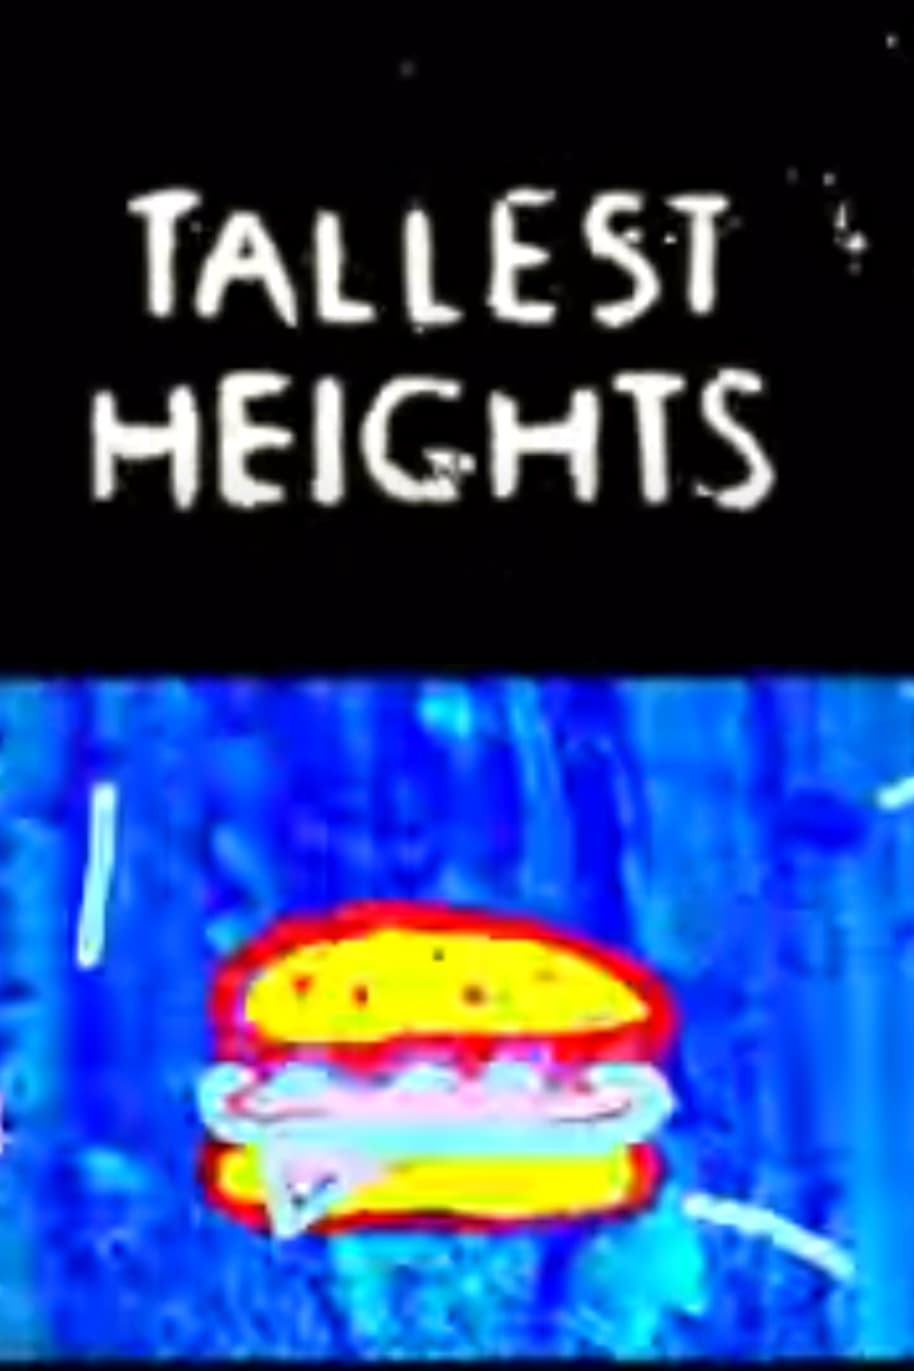 Tallest Heights